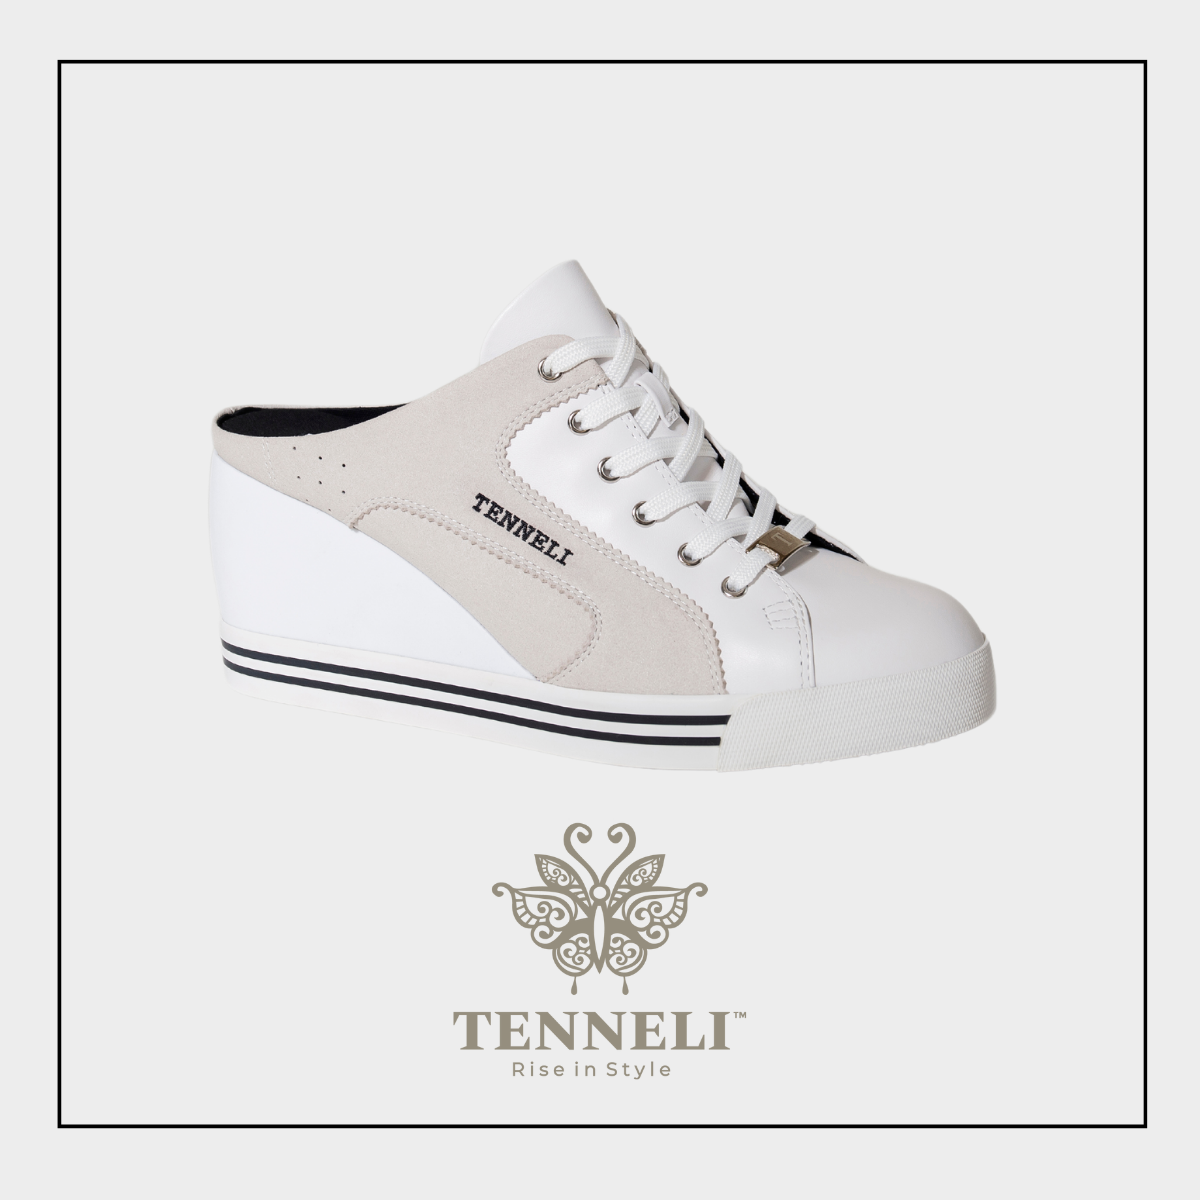 Tenneli Shoes